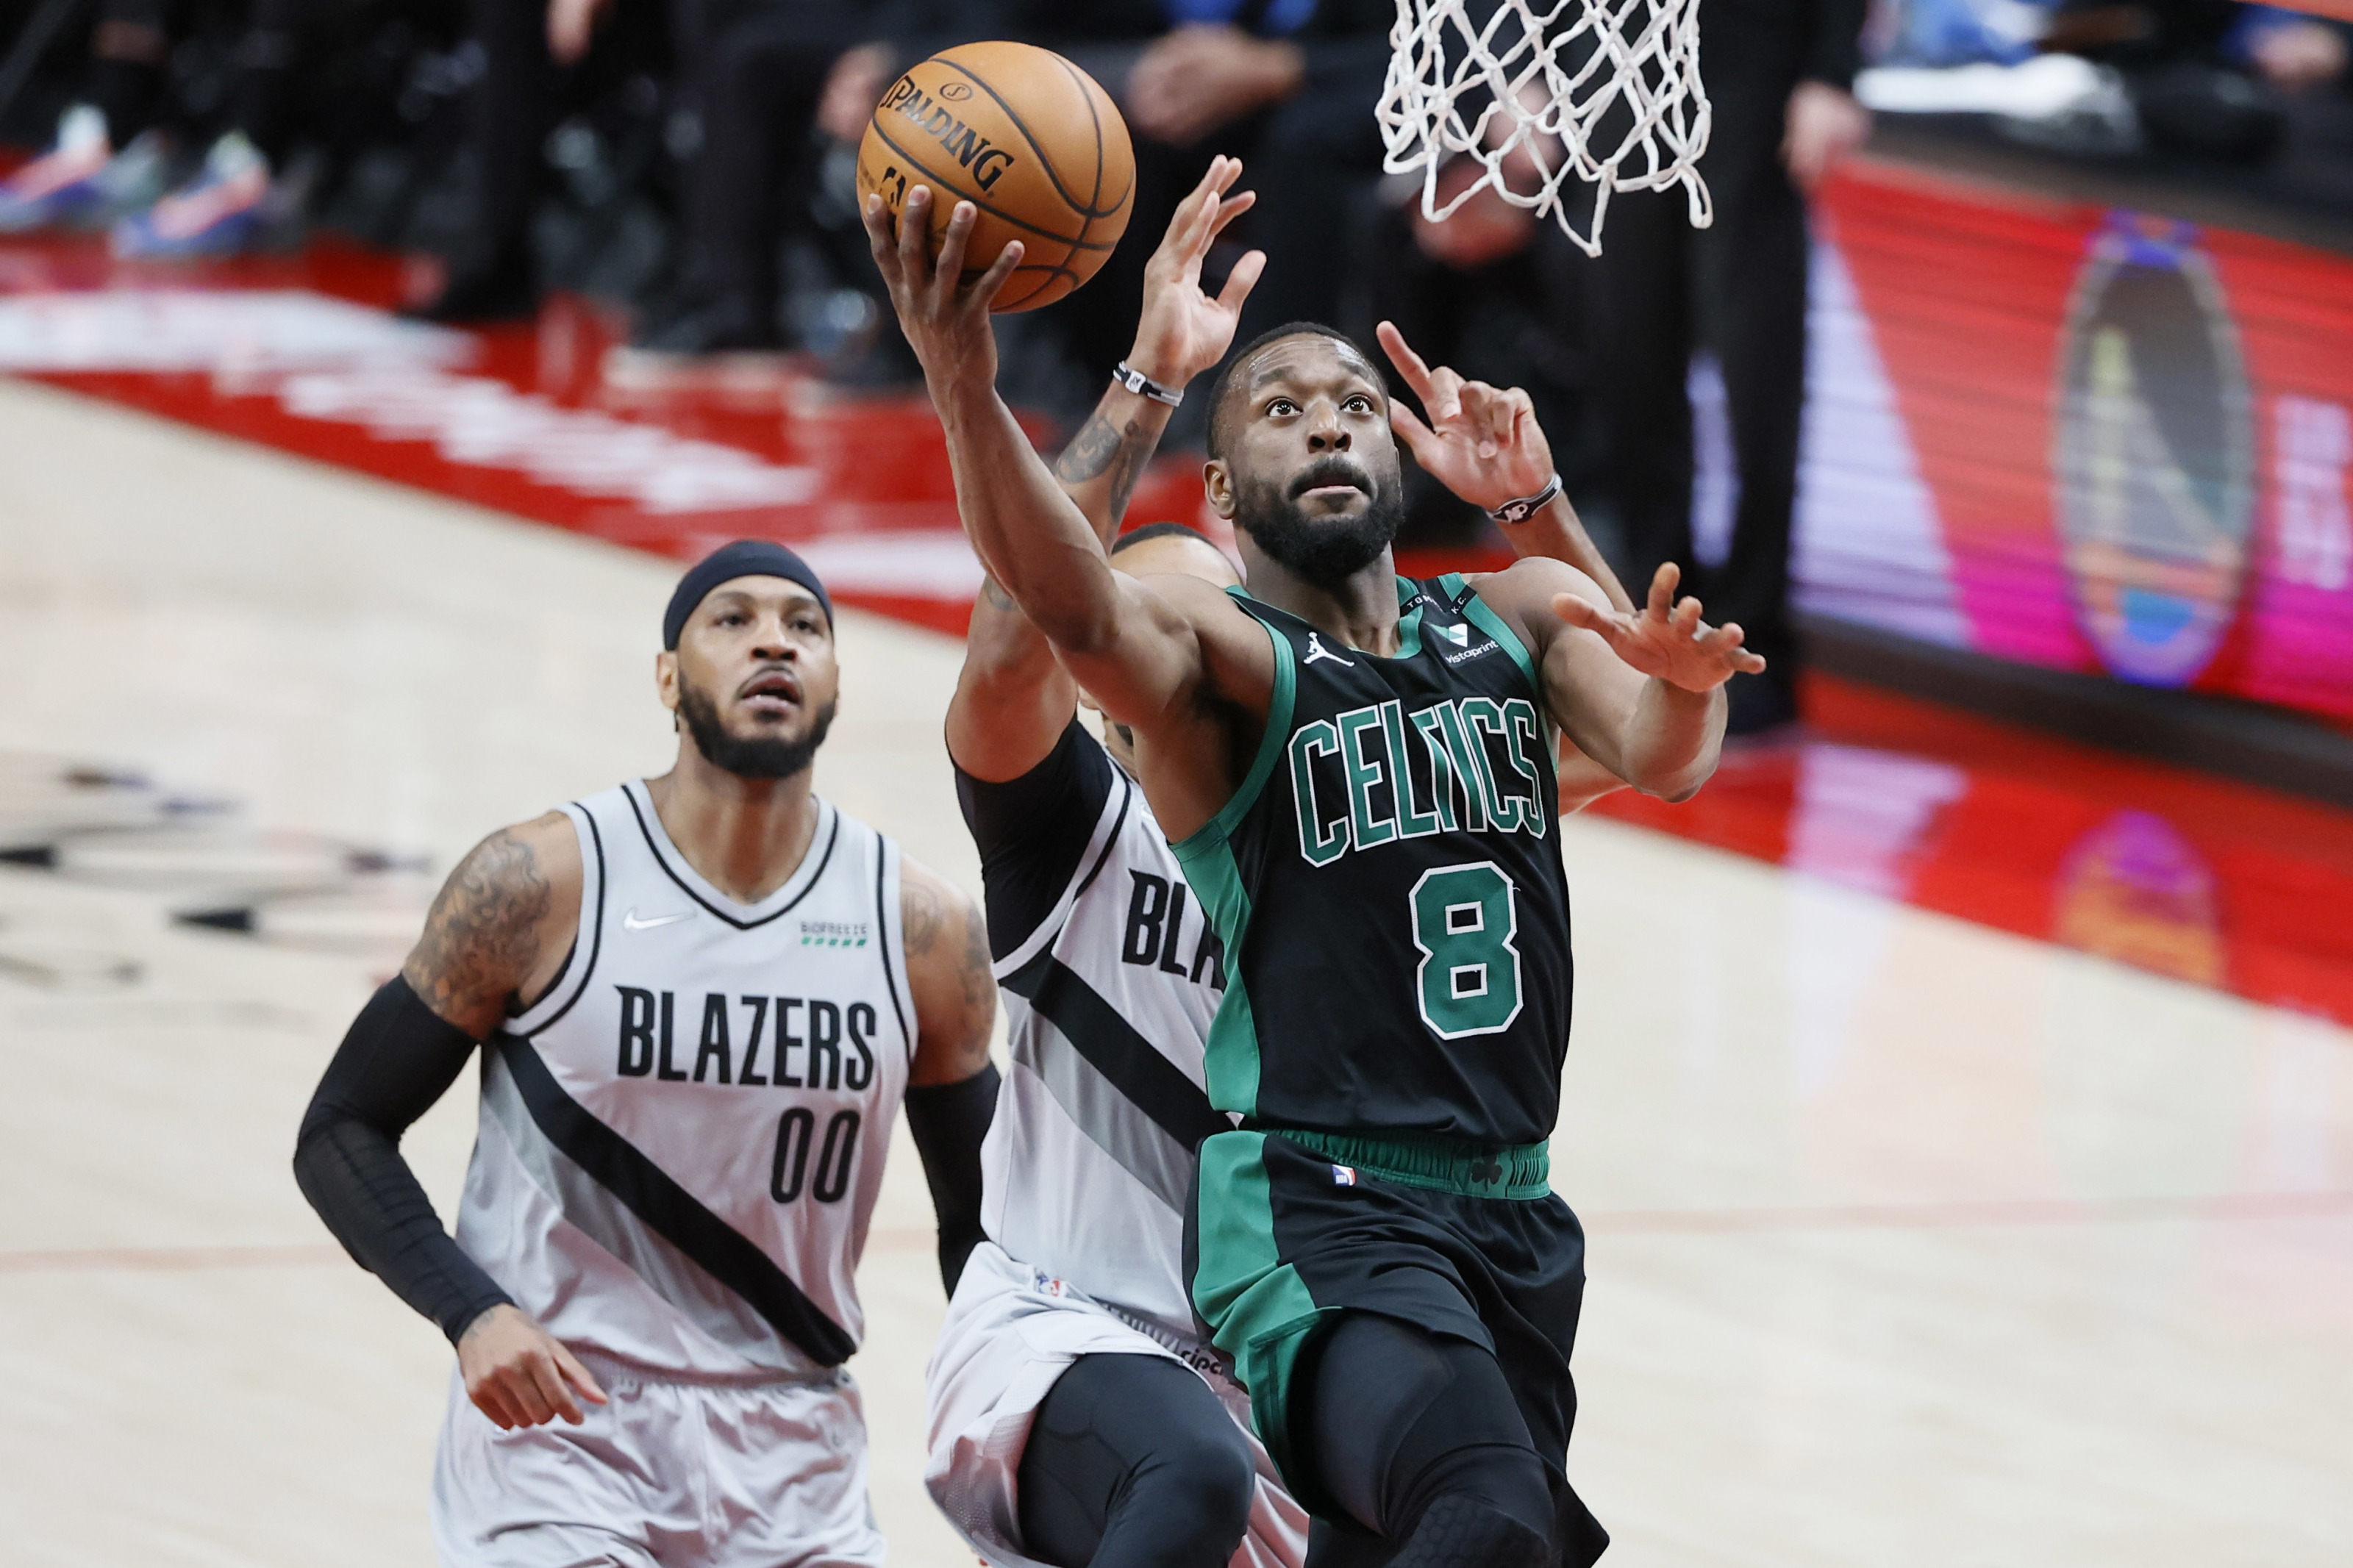 To make Celtics better, Kemba Walker believes he must be better